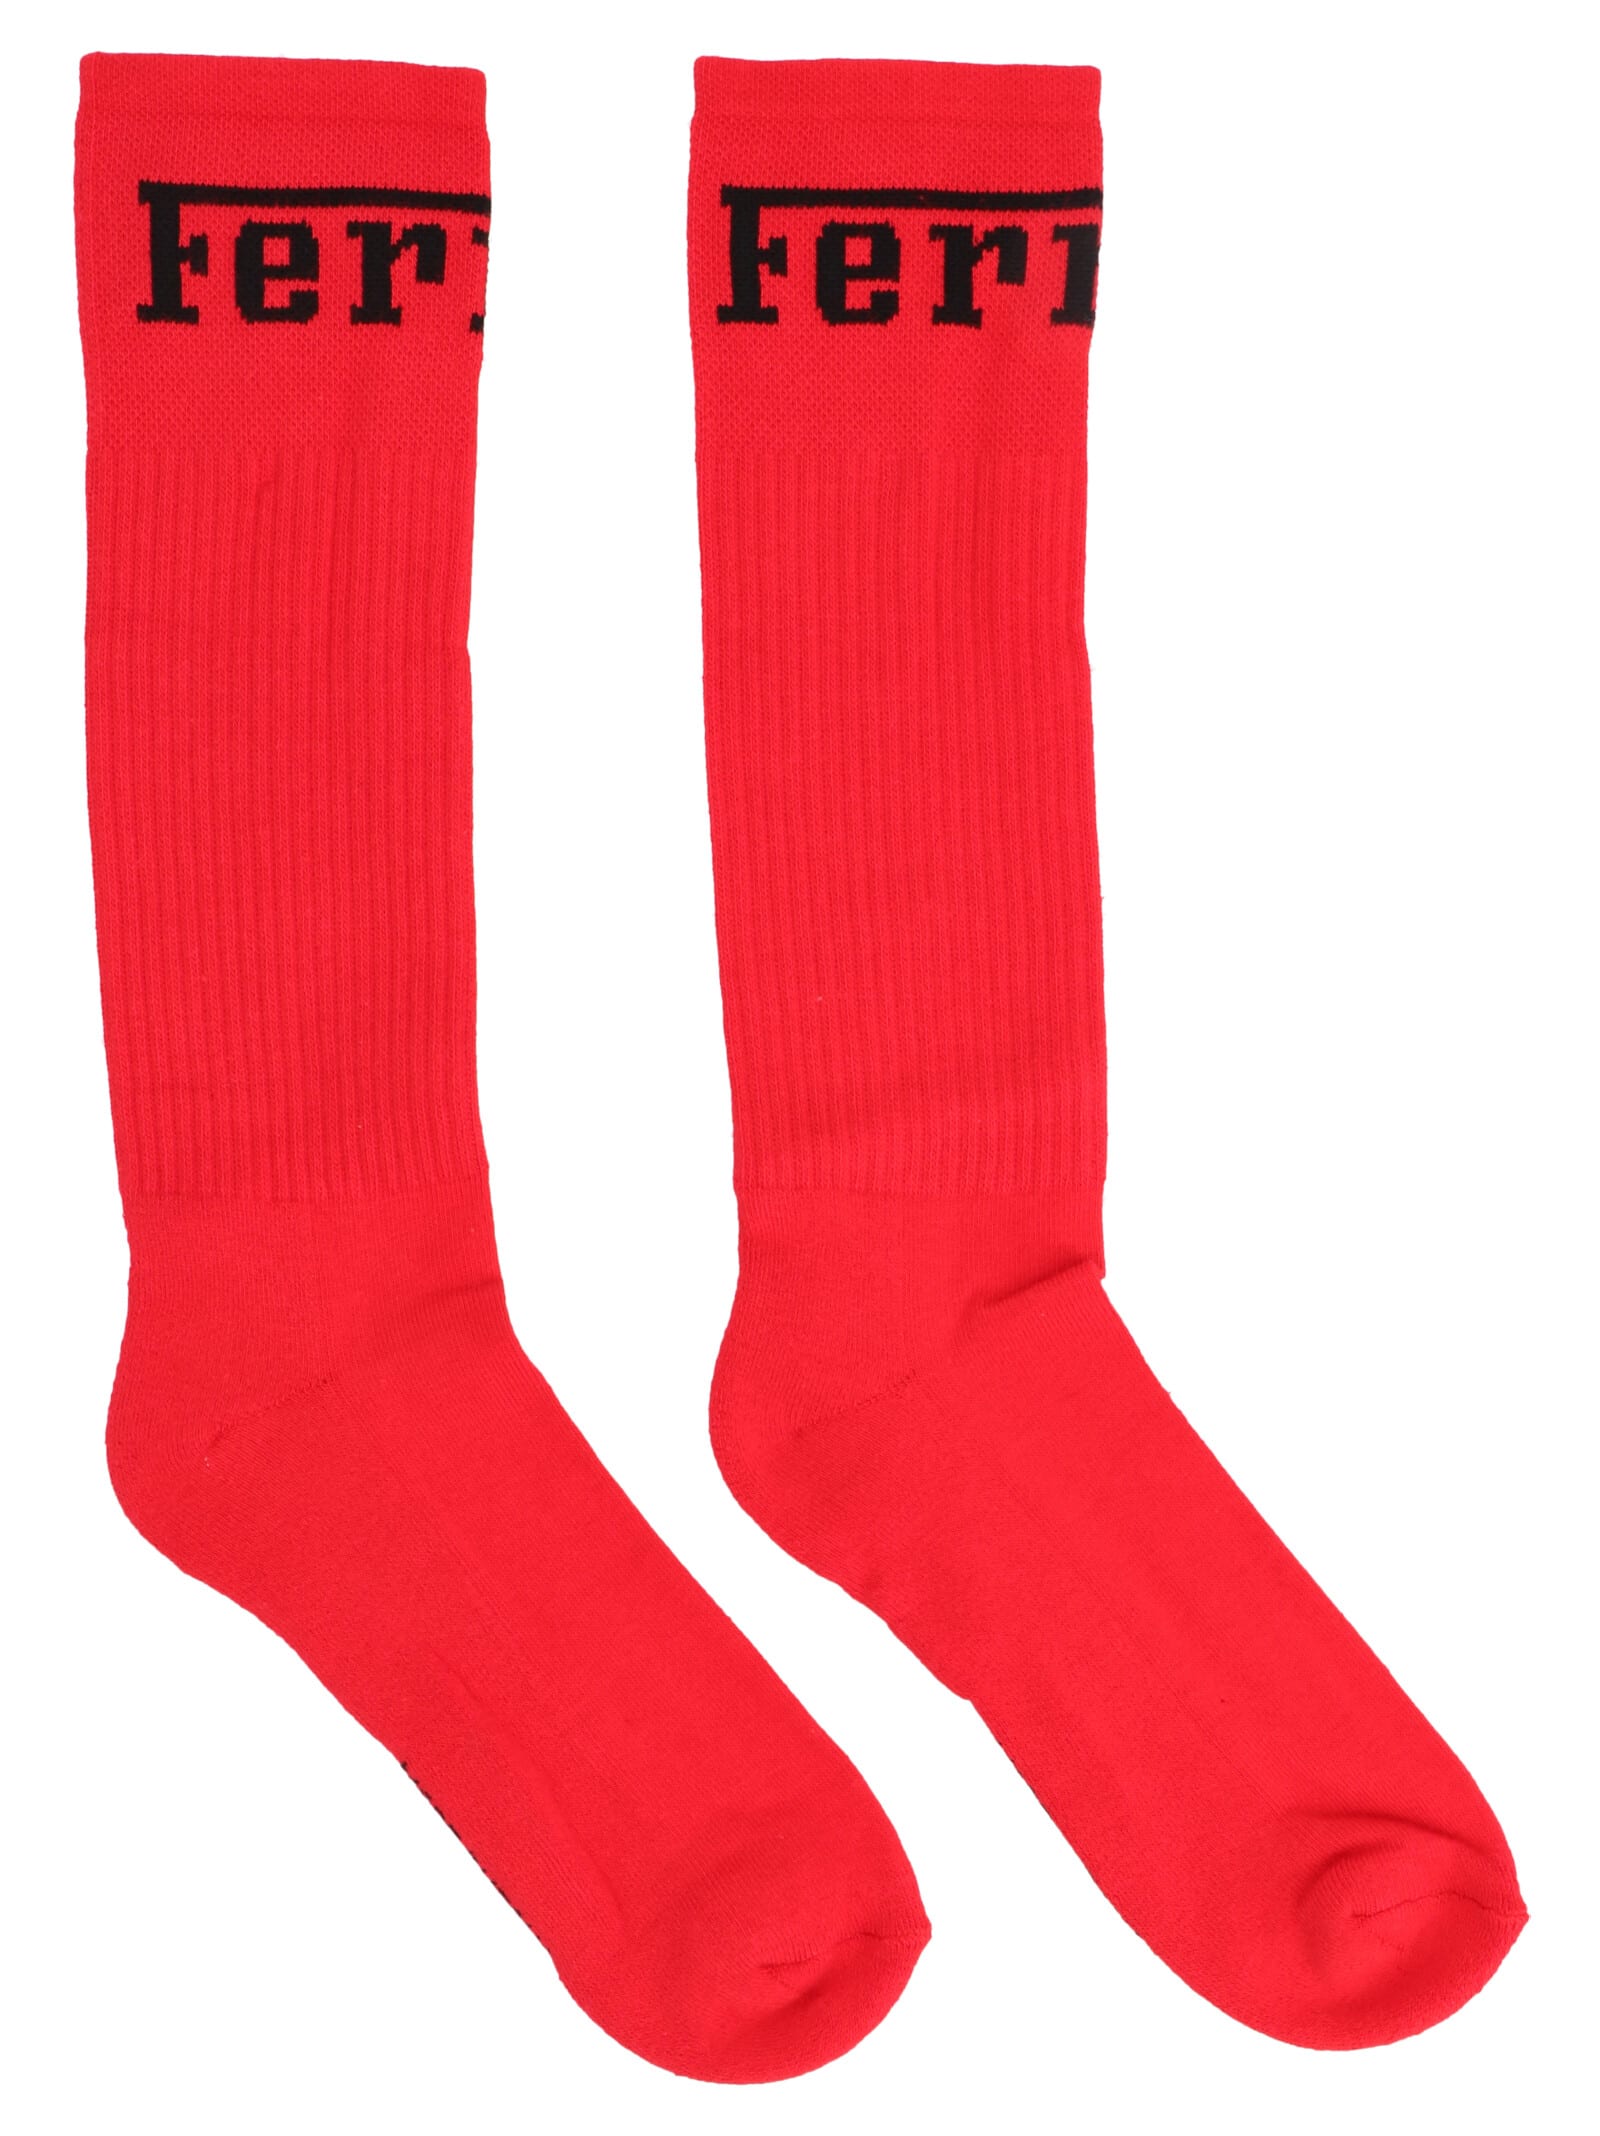 Ferrari Socks In Red